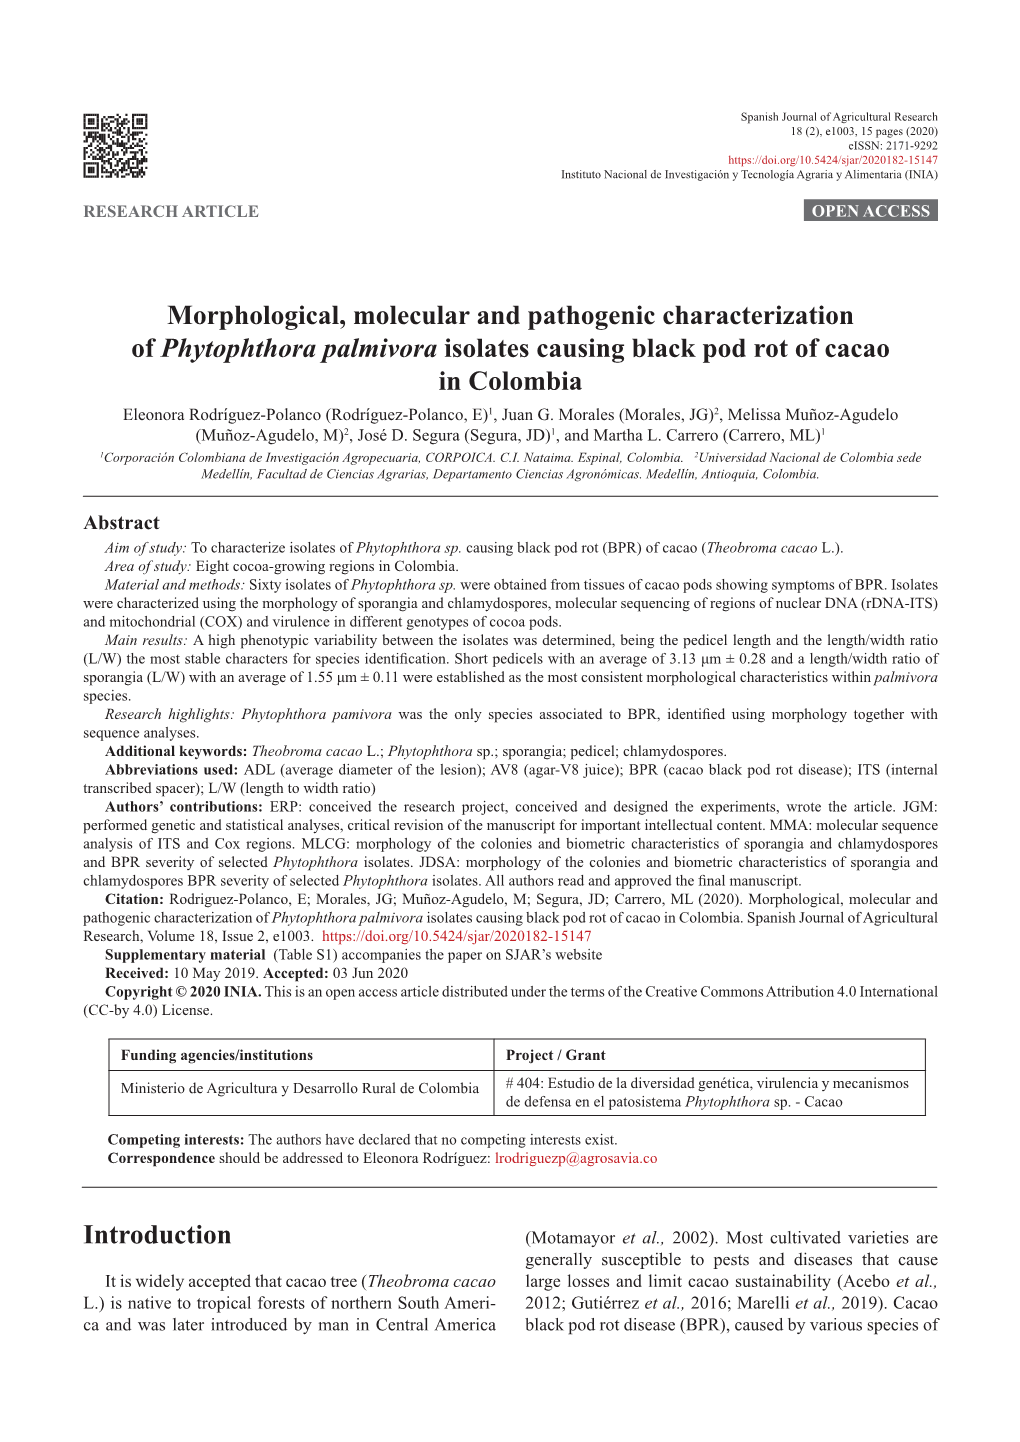 Morphological, Molecular and Pathogenic Characterization Of